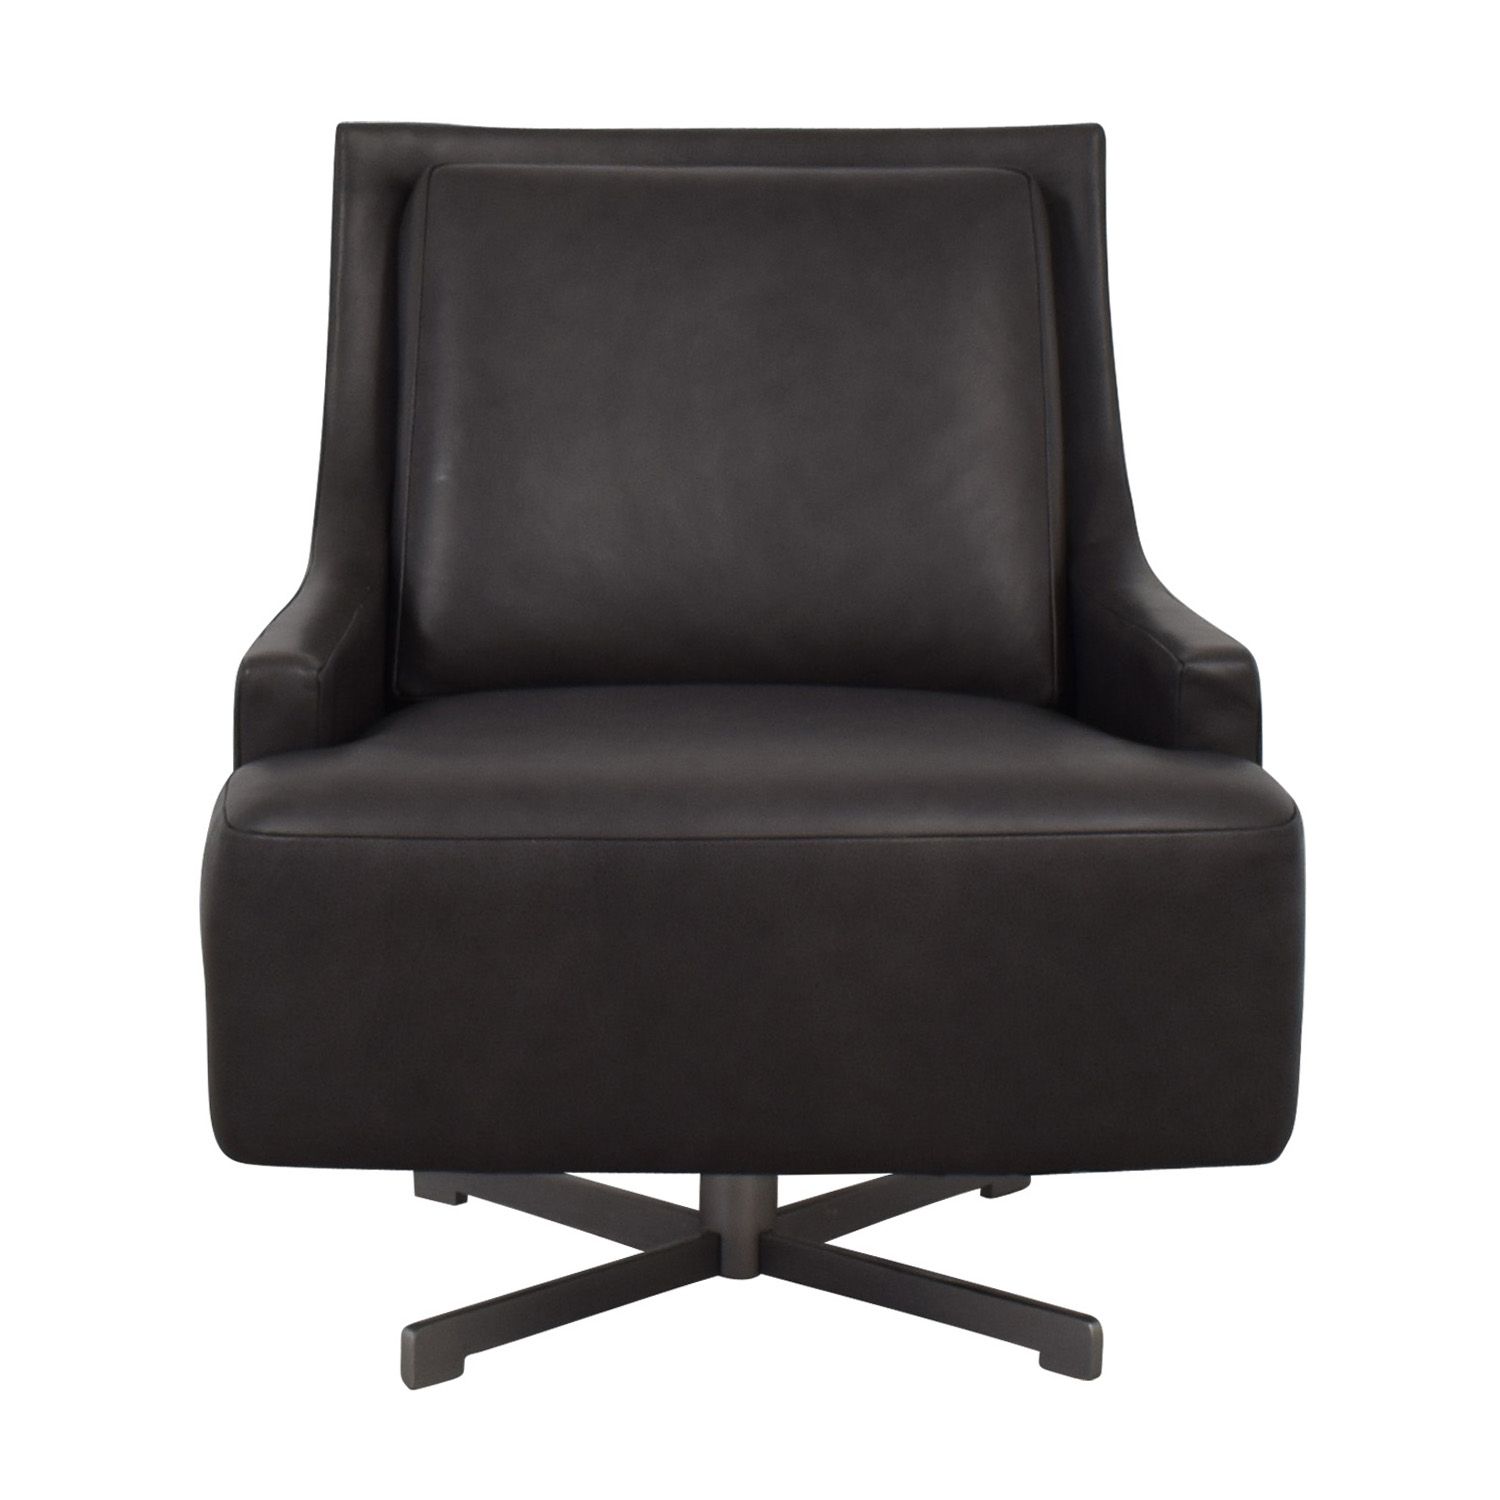 86% Off – Hbf Hbf Dark Grey Swivel Lounge Chair / Chairs Pertaining To Dark Grey Swivel Chairs (View 4 of 20)